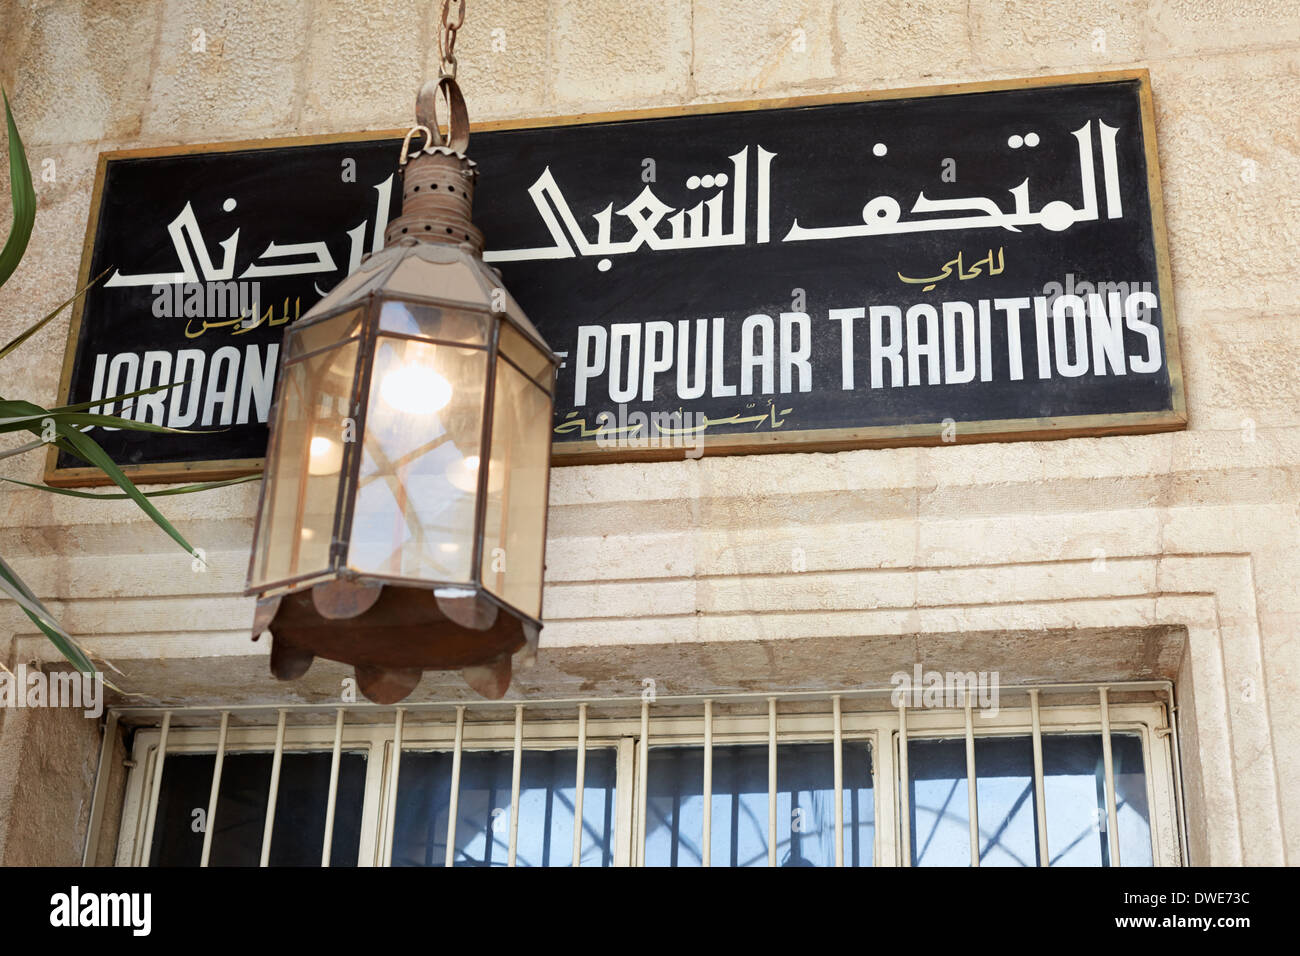 Jordan Museum of popular tradition sign in Amman, Jordan Stock Photo